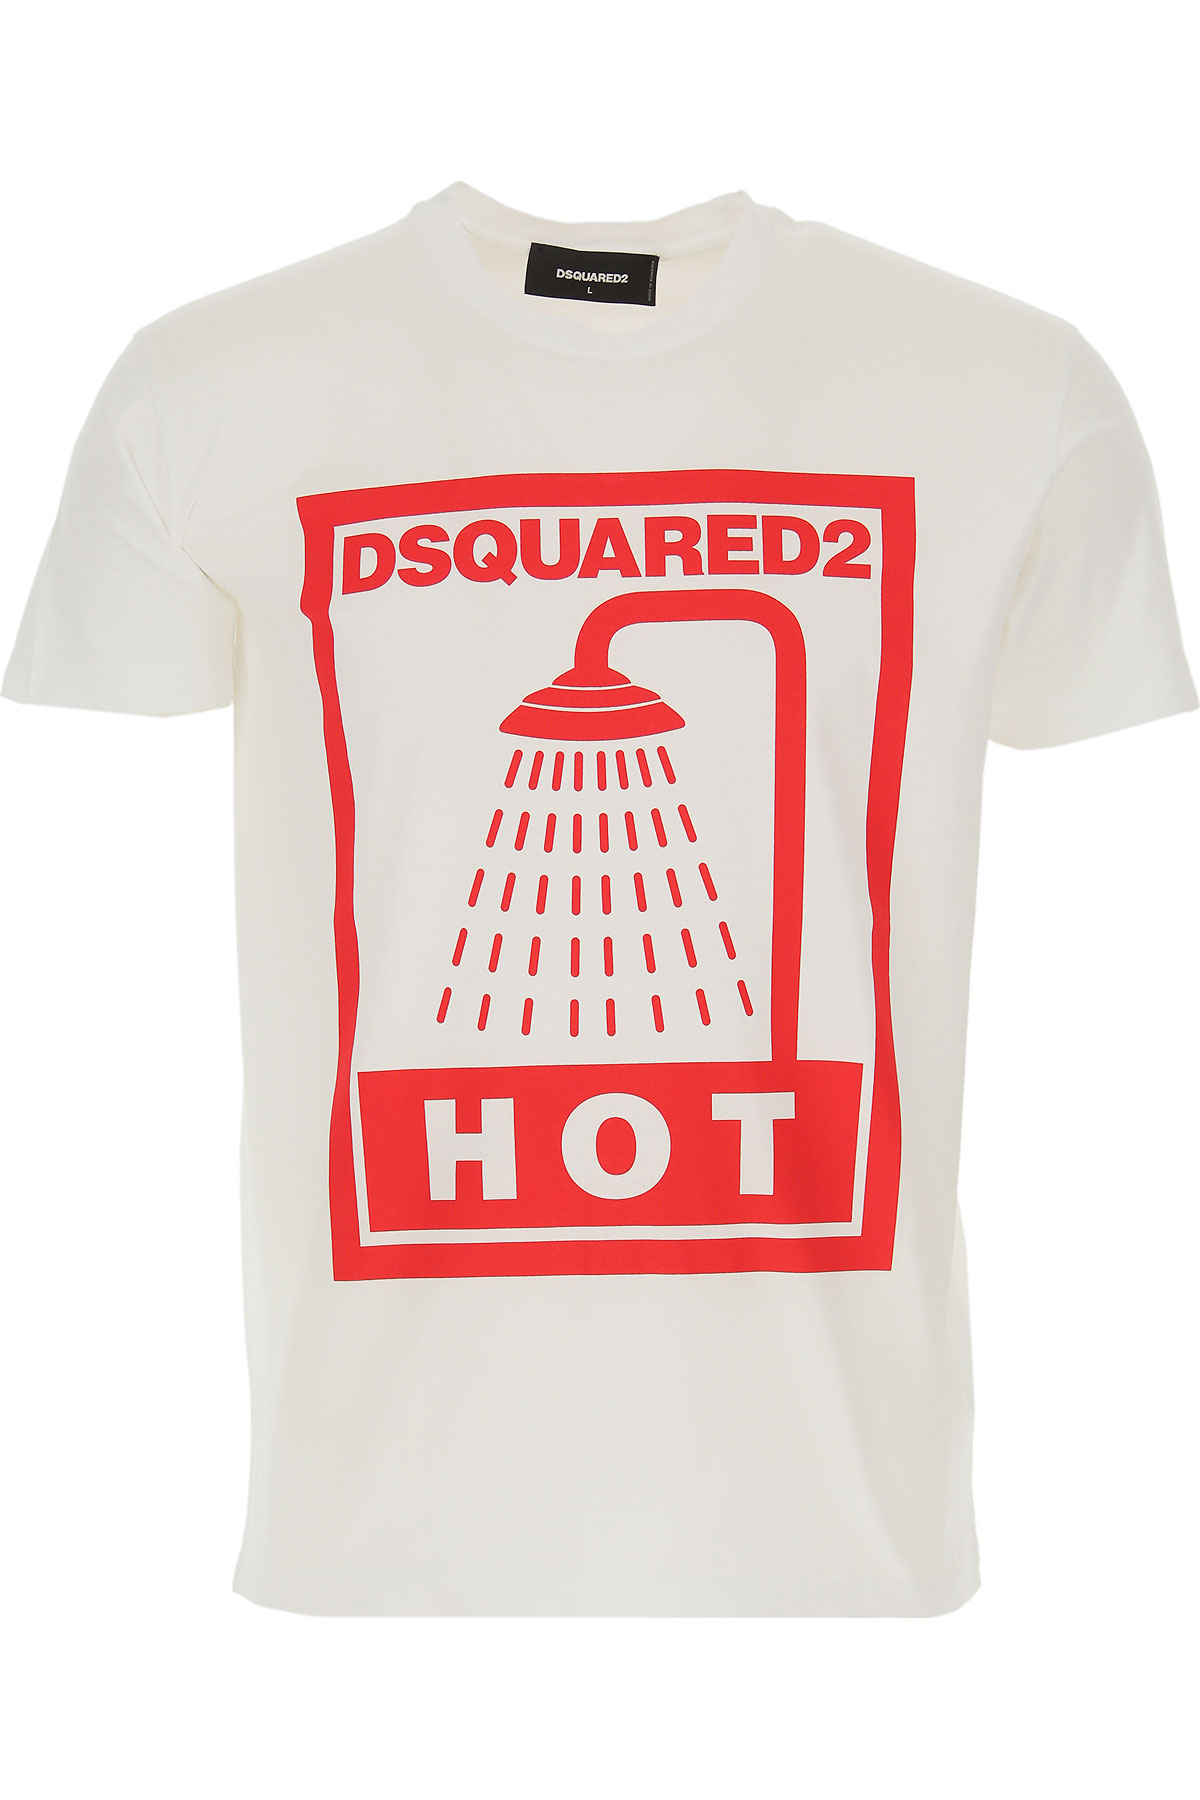 dsquared2 t shirt 2019